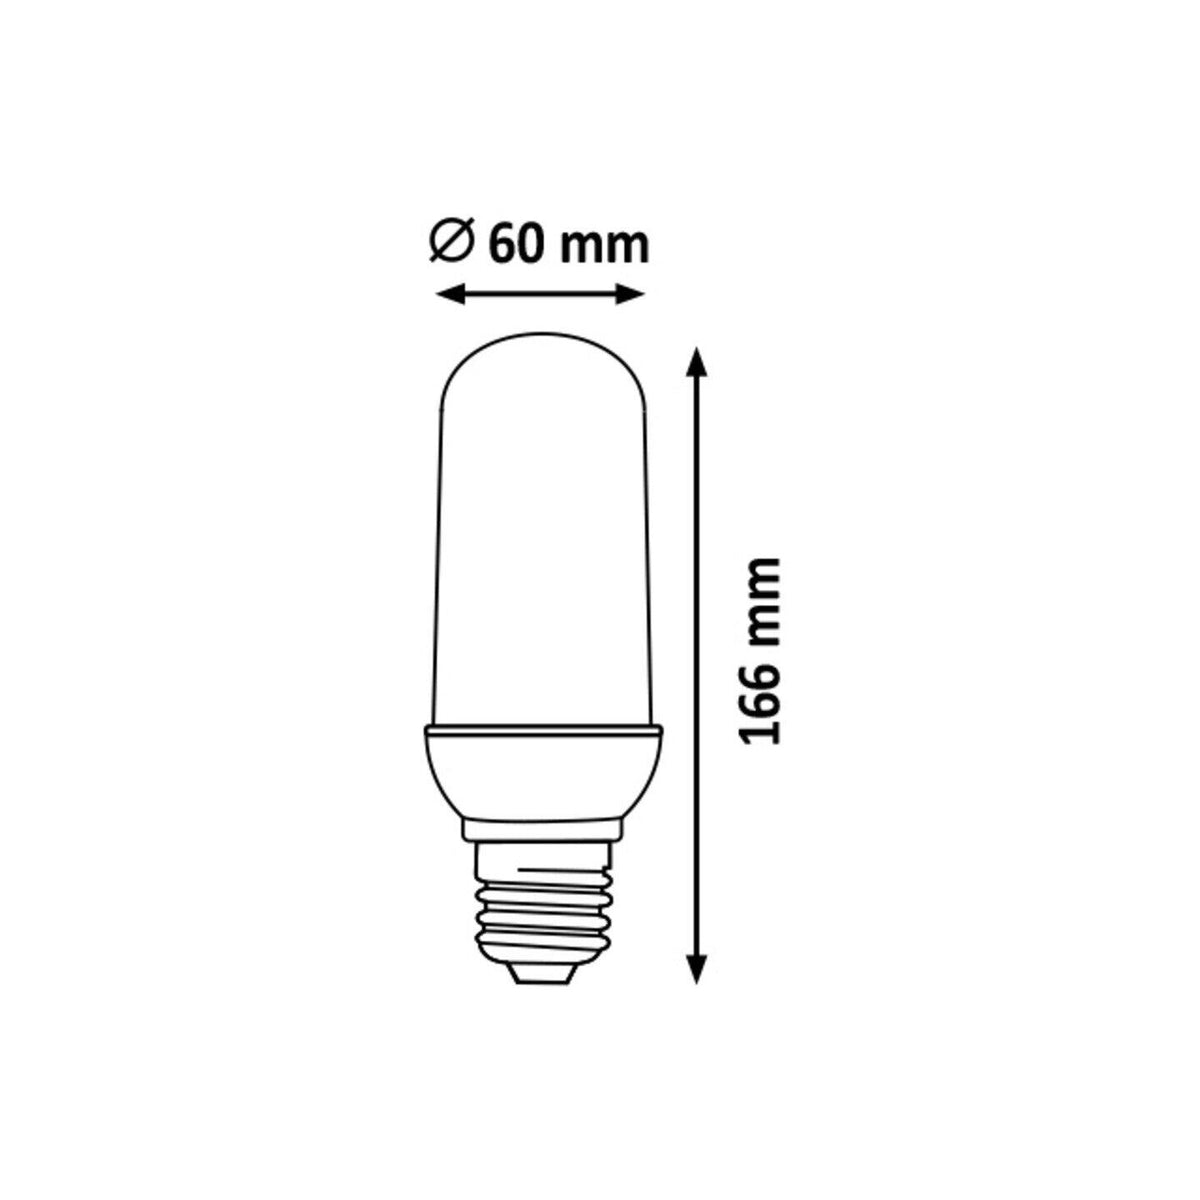 LED žárovka Rabalux 1442, 3W, E27, efekt plamene